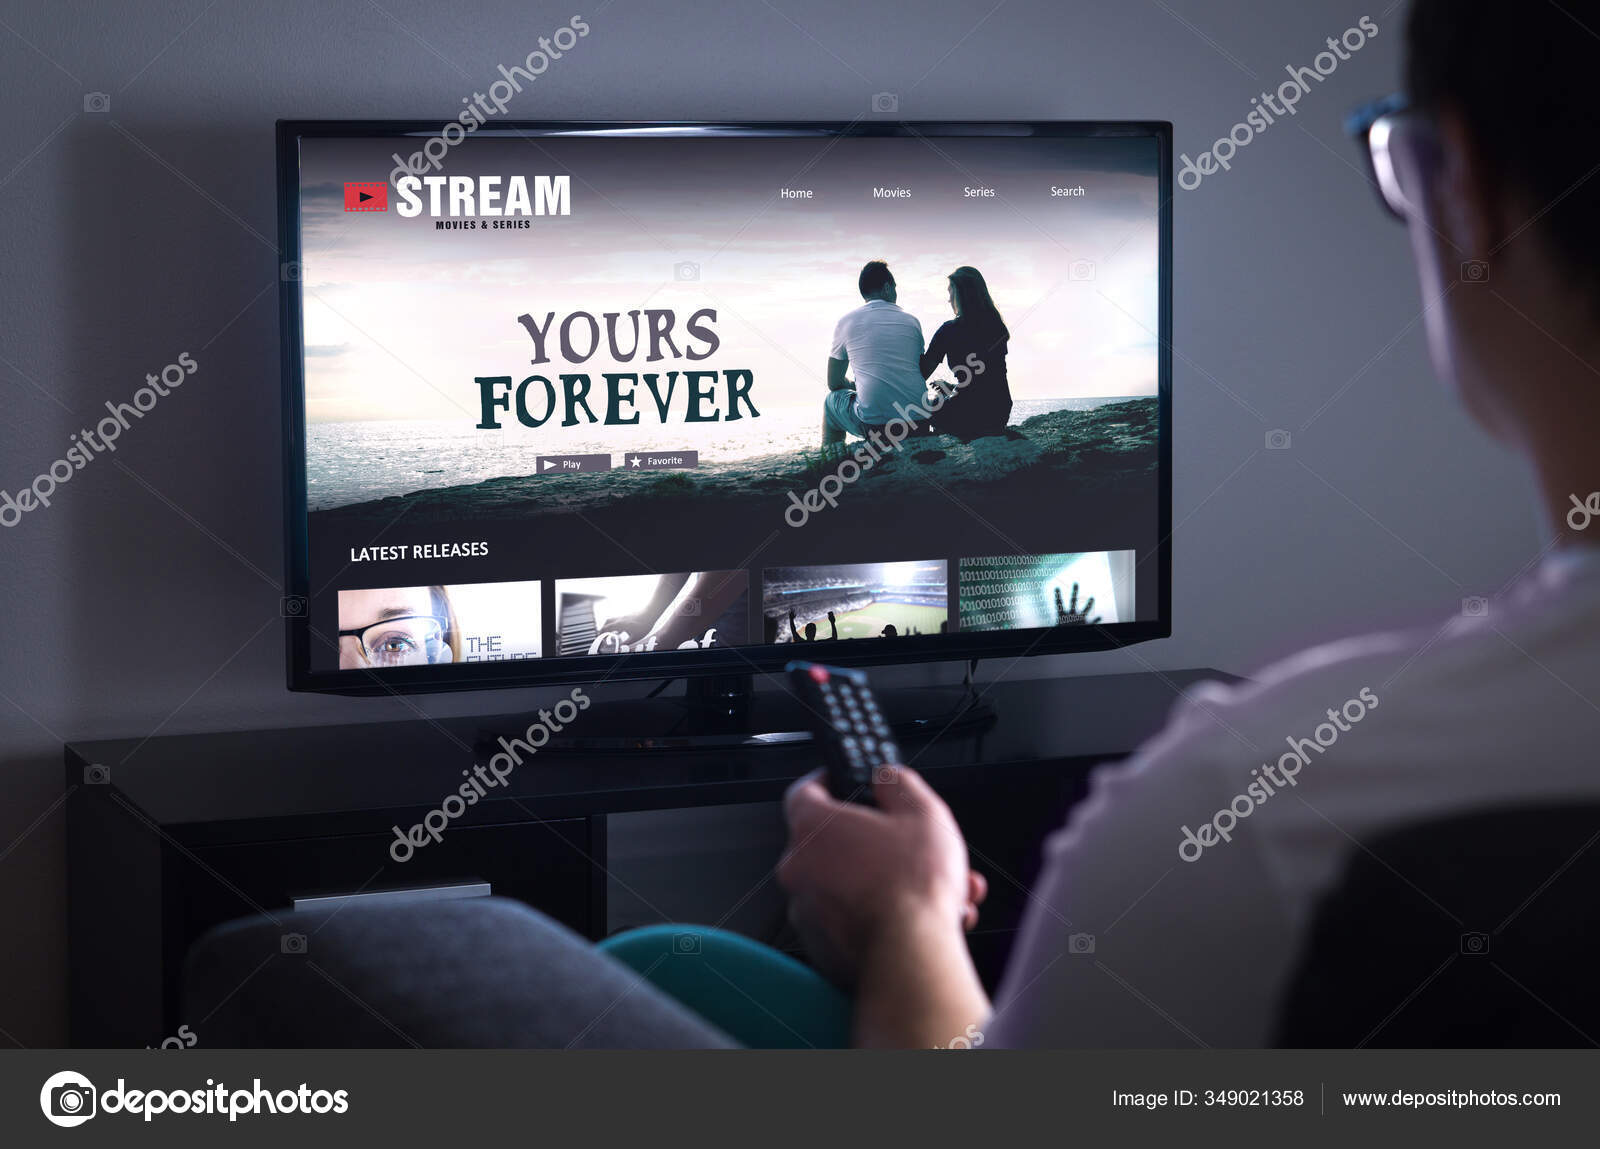 Online Movie Stream Service Smart Streaming Series Demand Video Vod Stock Photo by ©terovesalainen 349021358